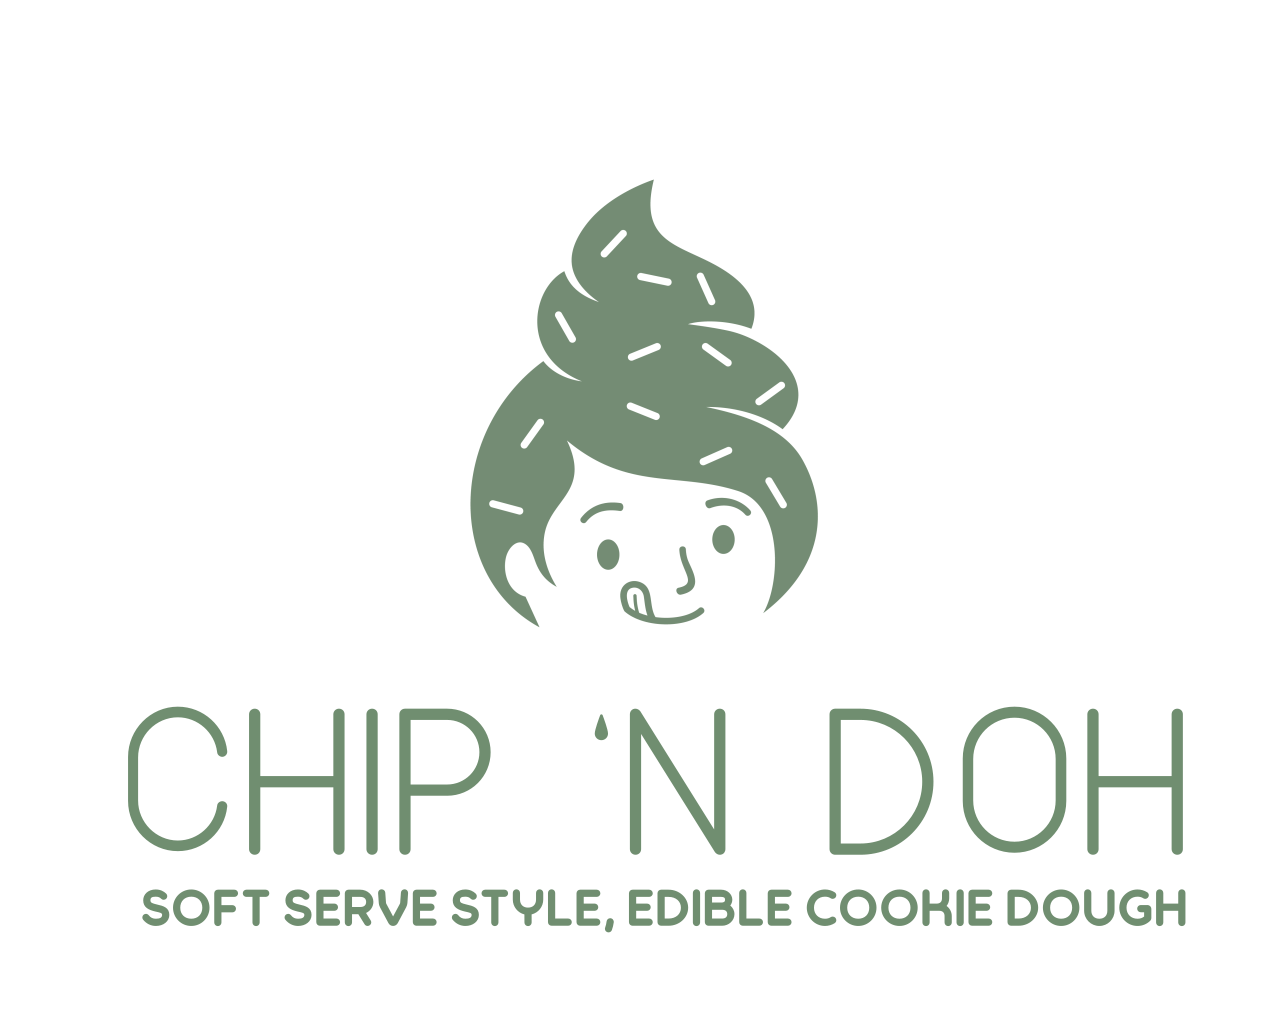 CHIP ‘N DOH's logo